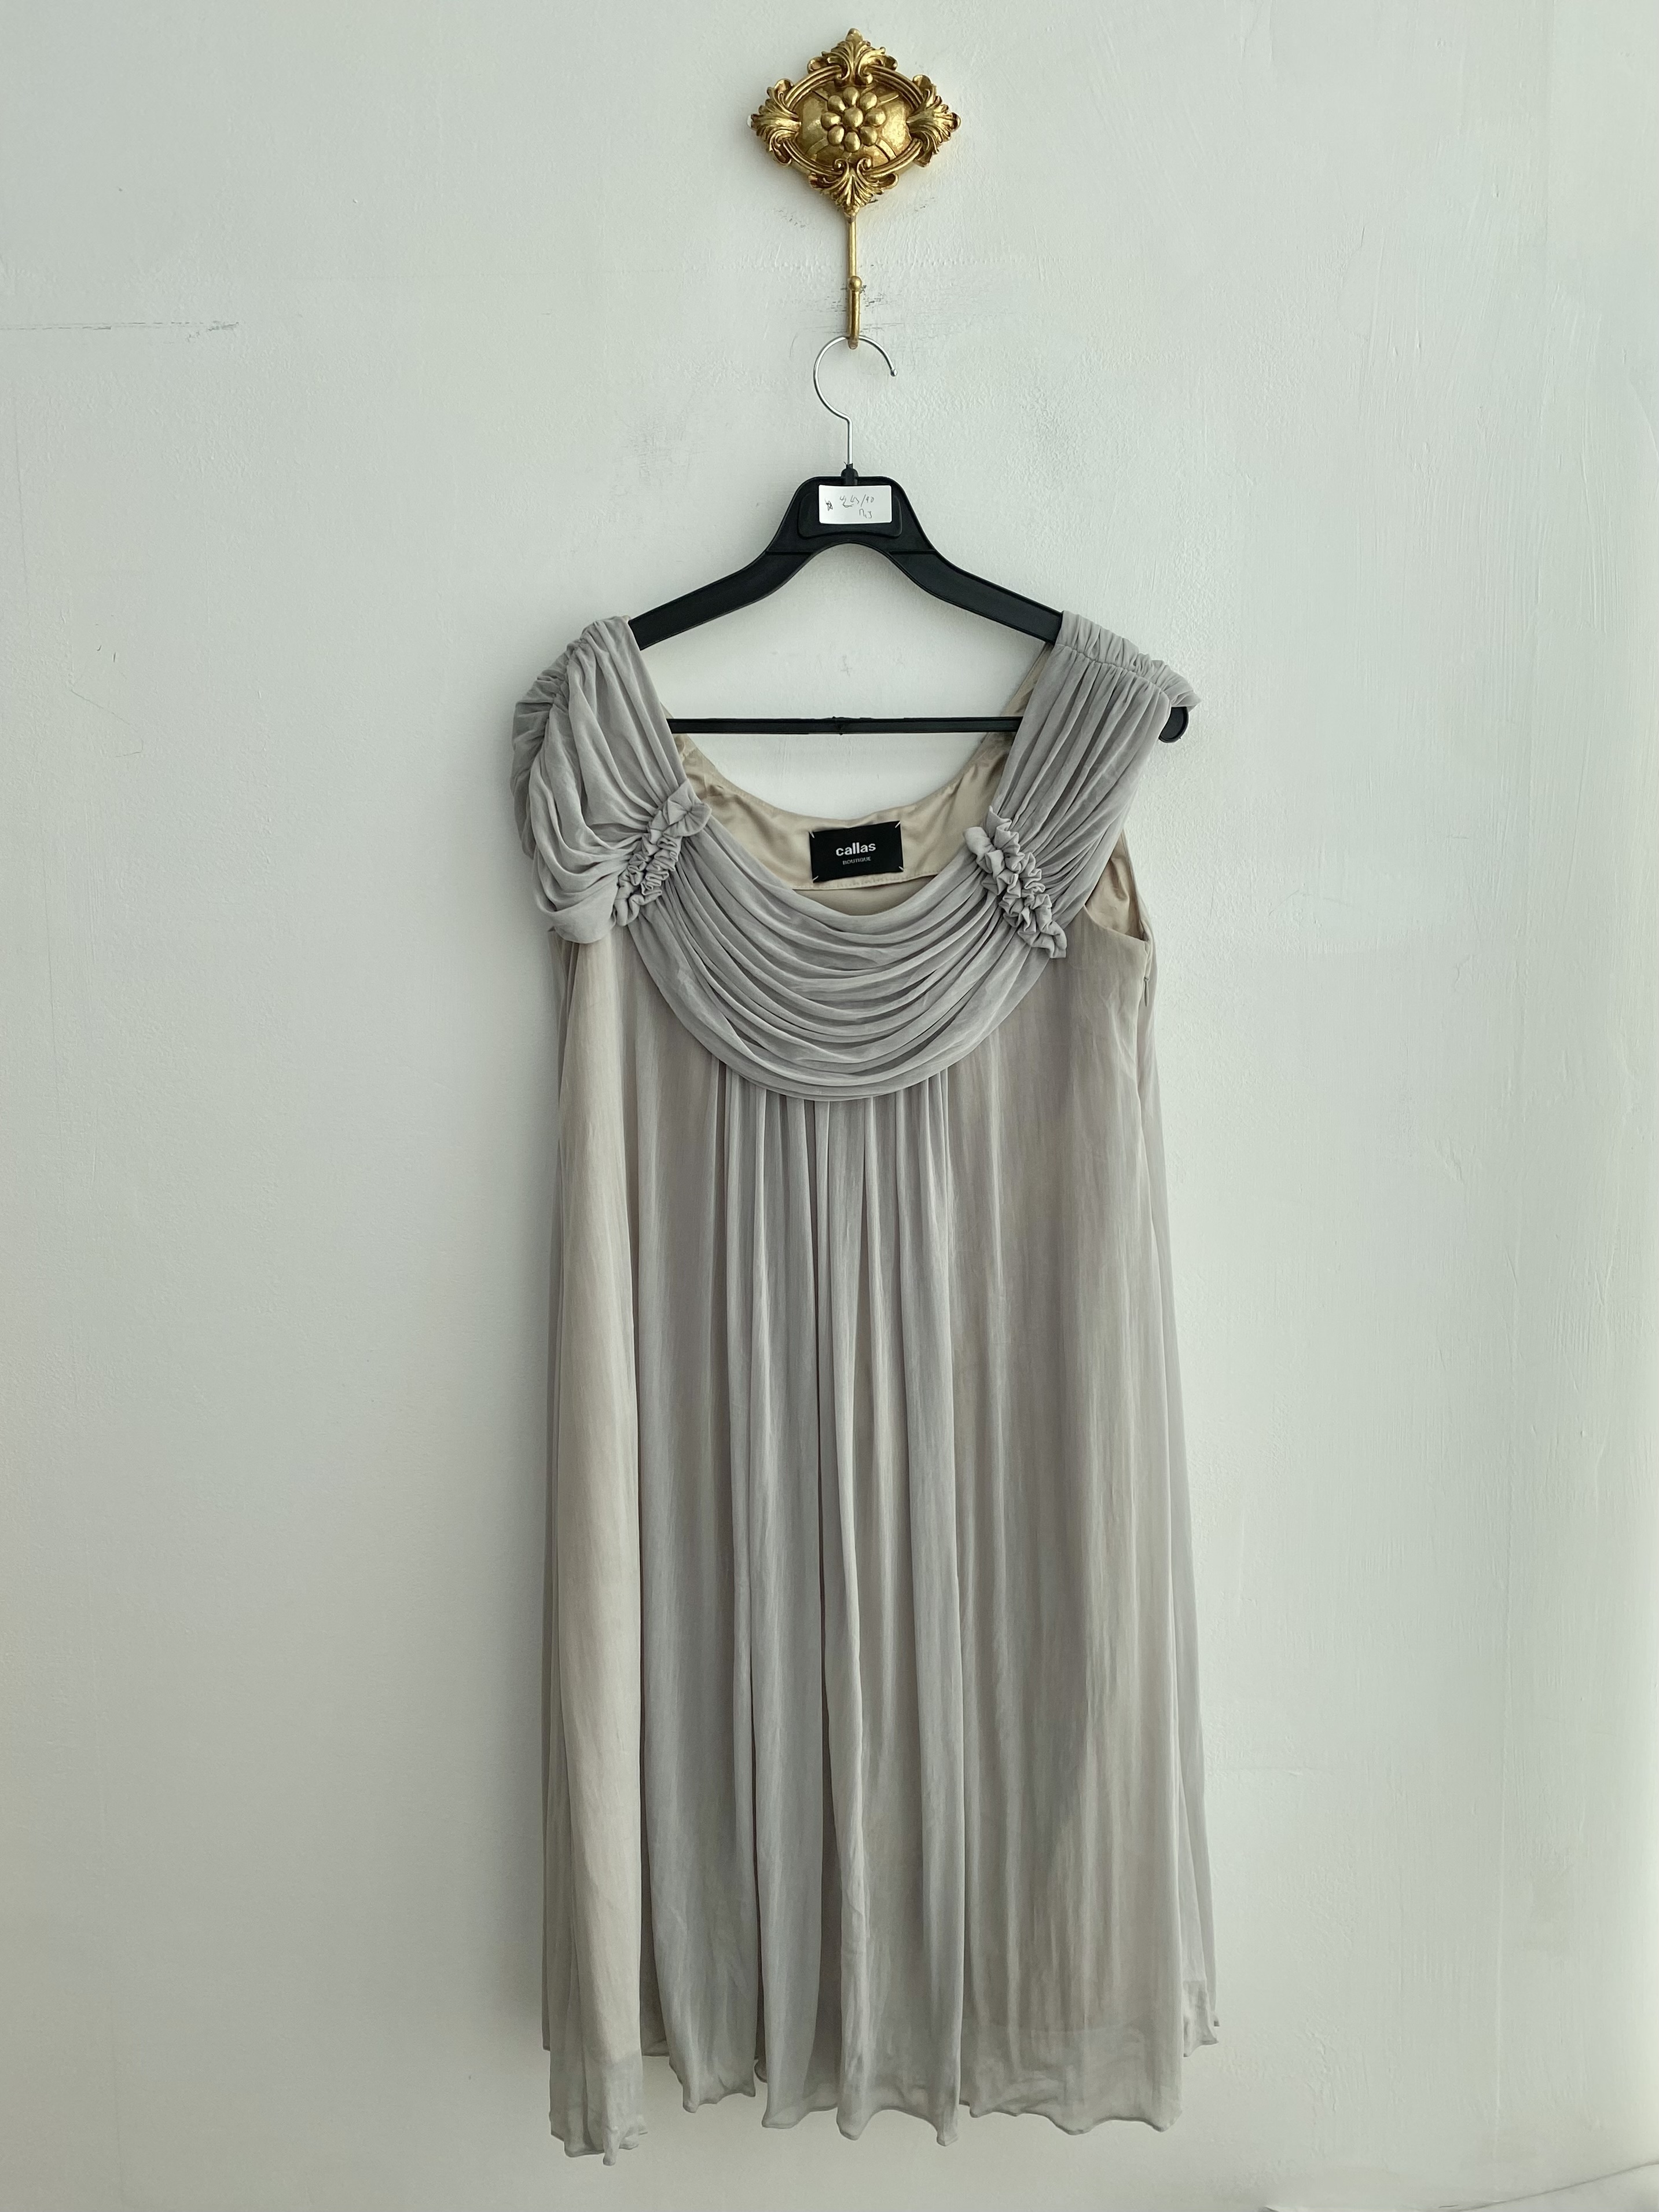 Callas light grey frill pleated sleeveless dress